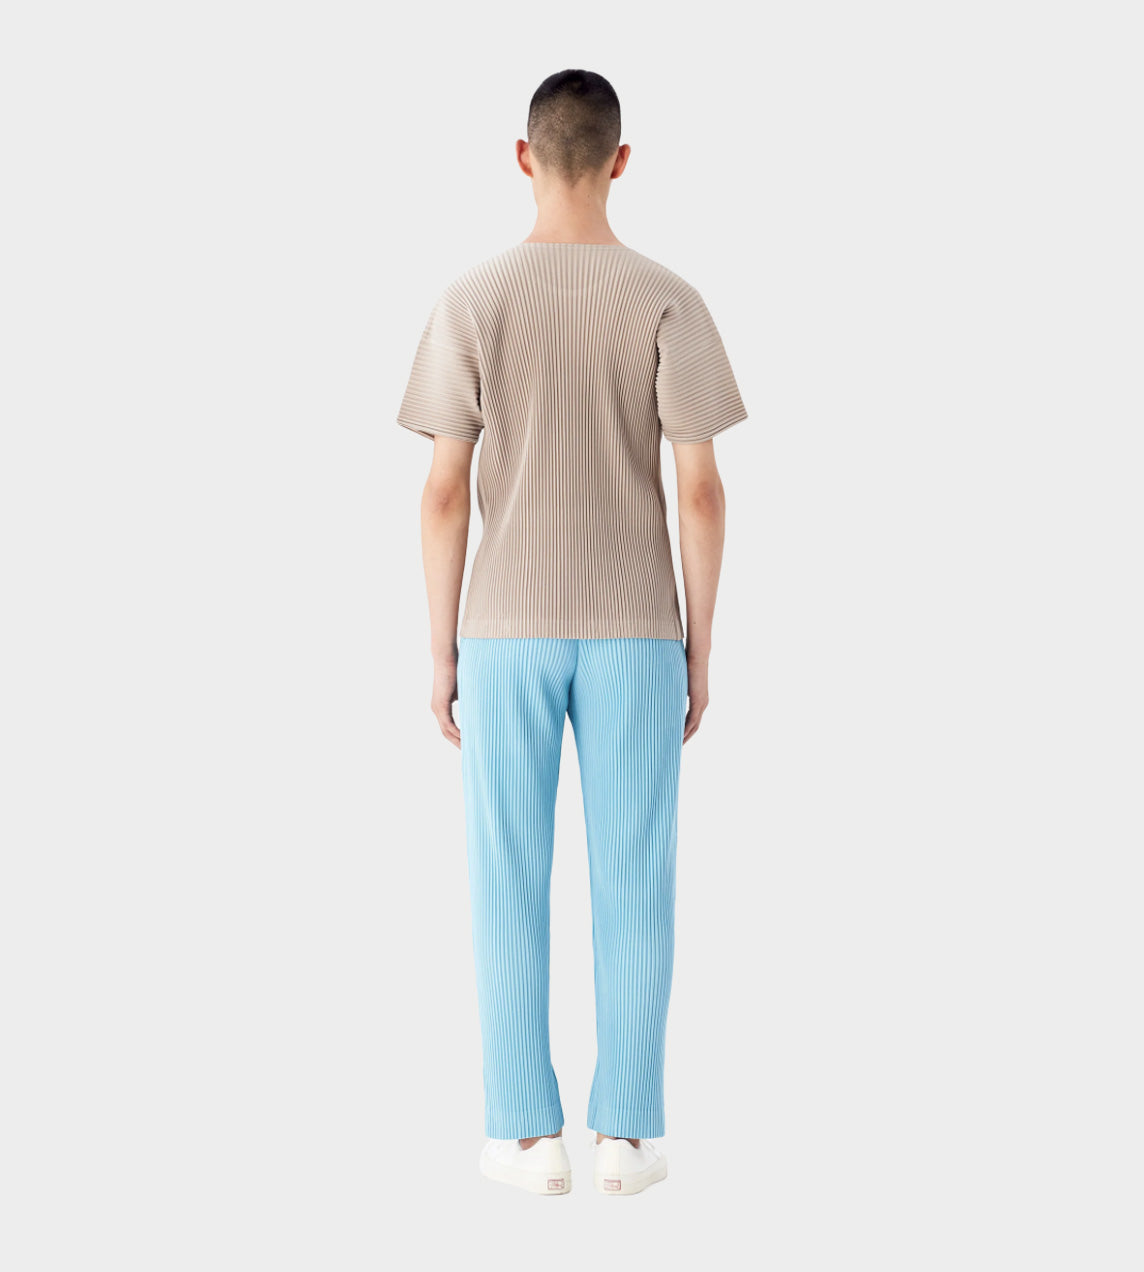 Homme Plisse Issey Miyake - Colour Pleats Pleated Pants Aqua Blue